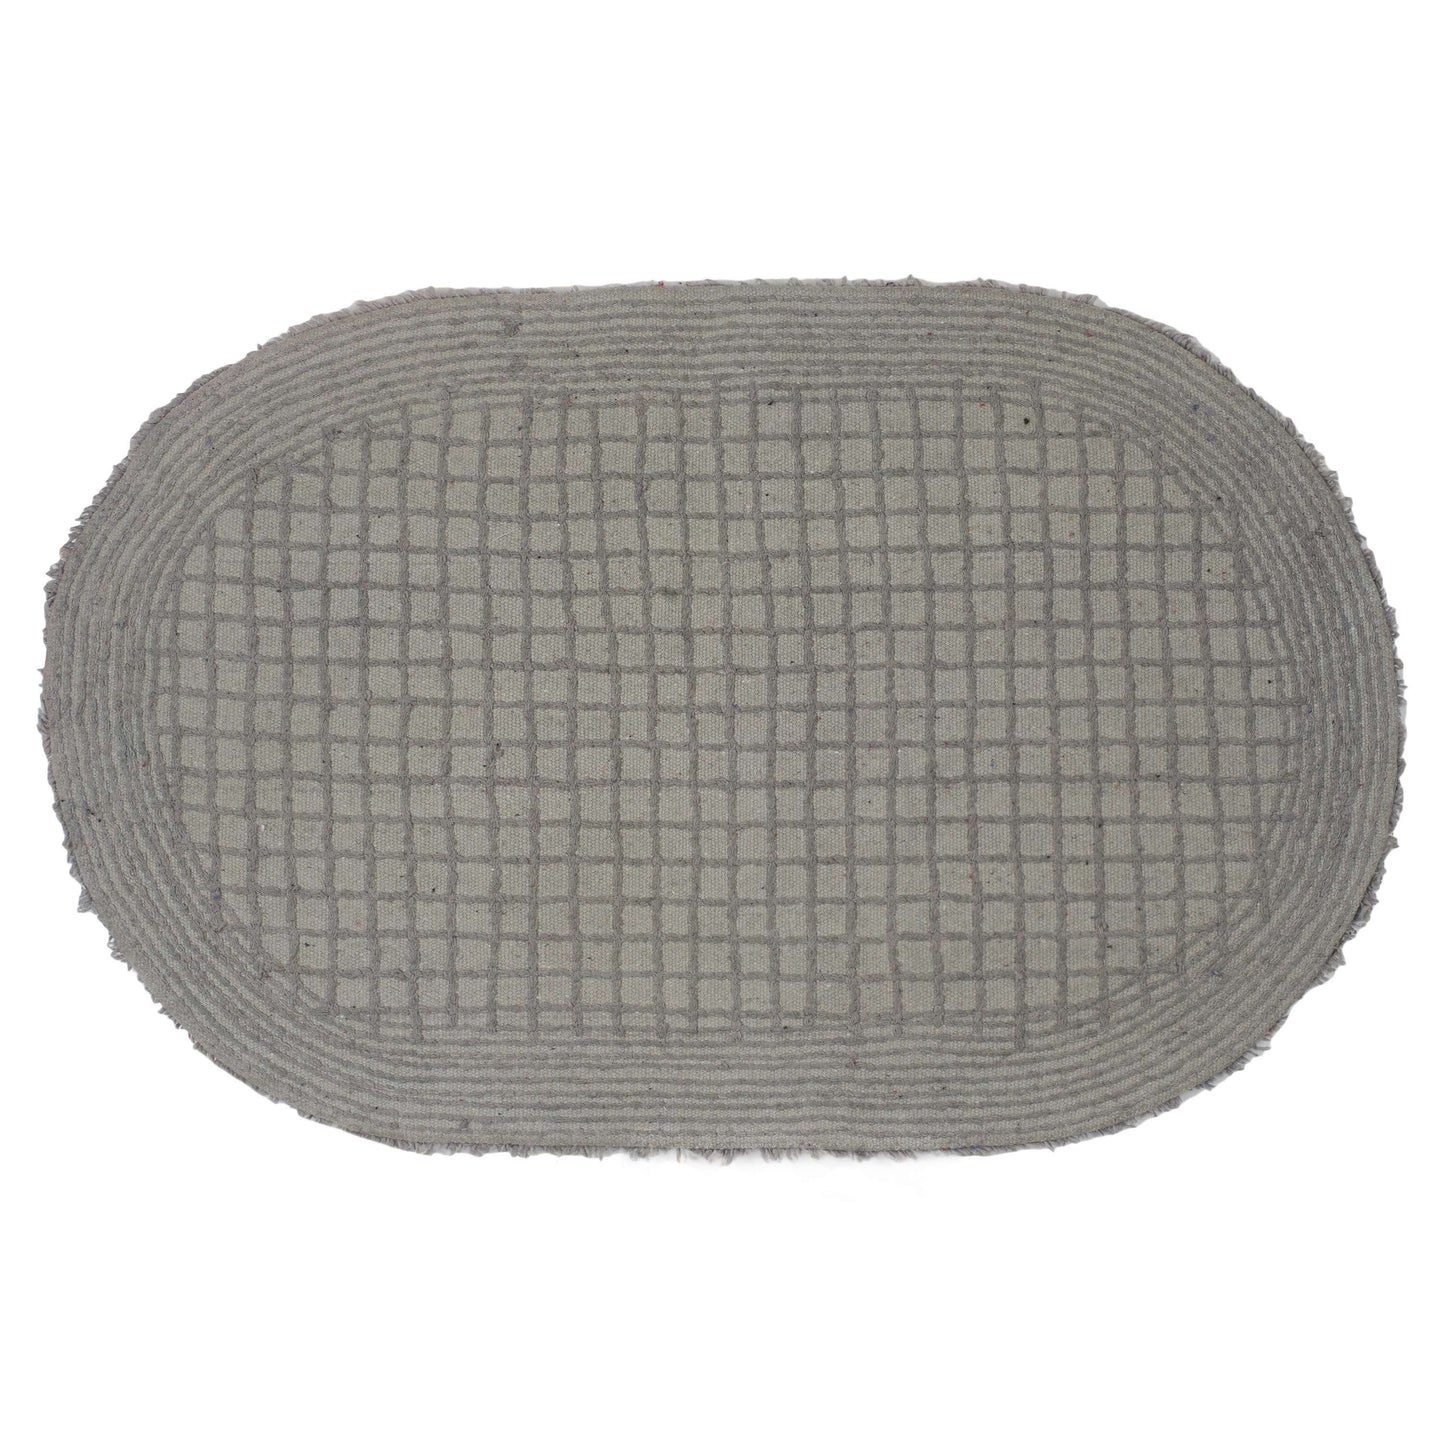 SWHF Premium Cotton Oval Anti Skid Bath Mat: Grey - SWHF